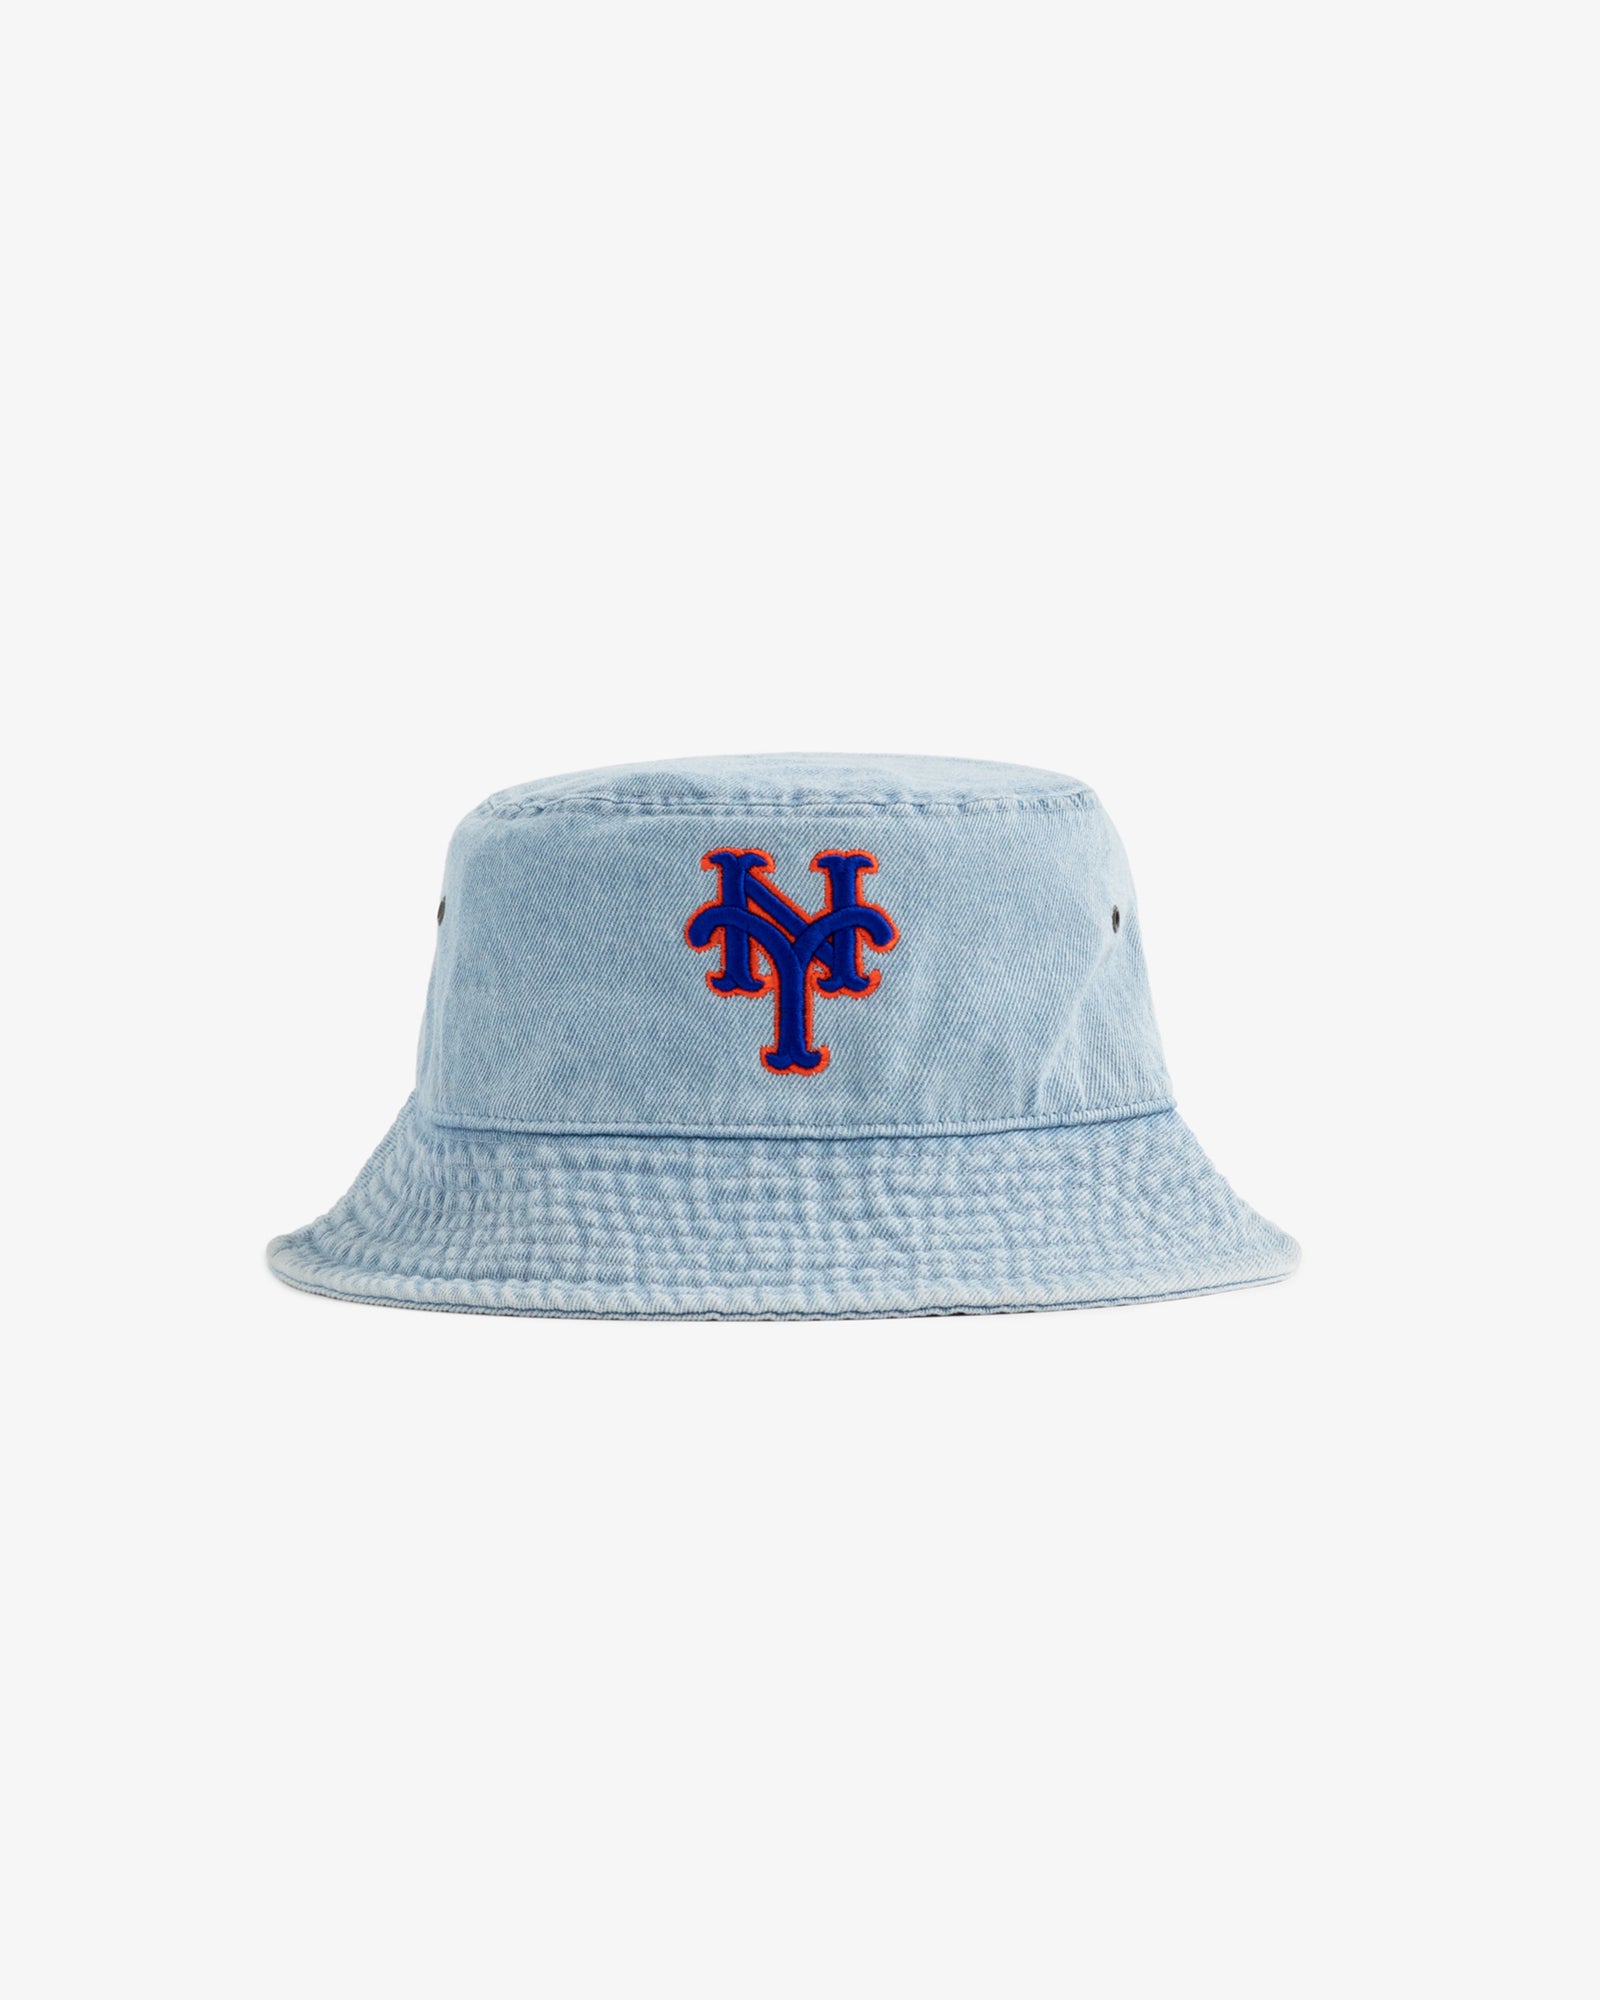 Vintage New York Mets Denim Bucket Hat at AimeLeonDore.com